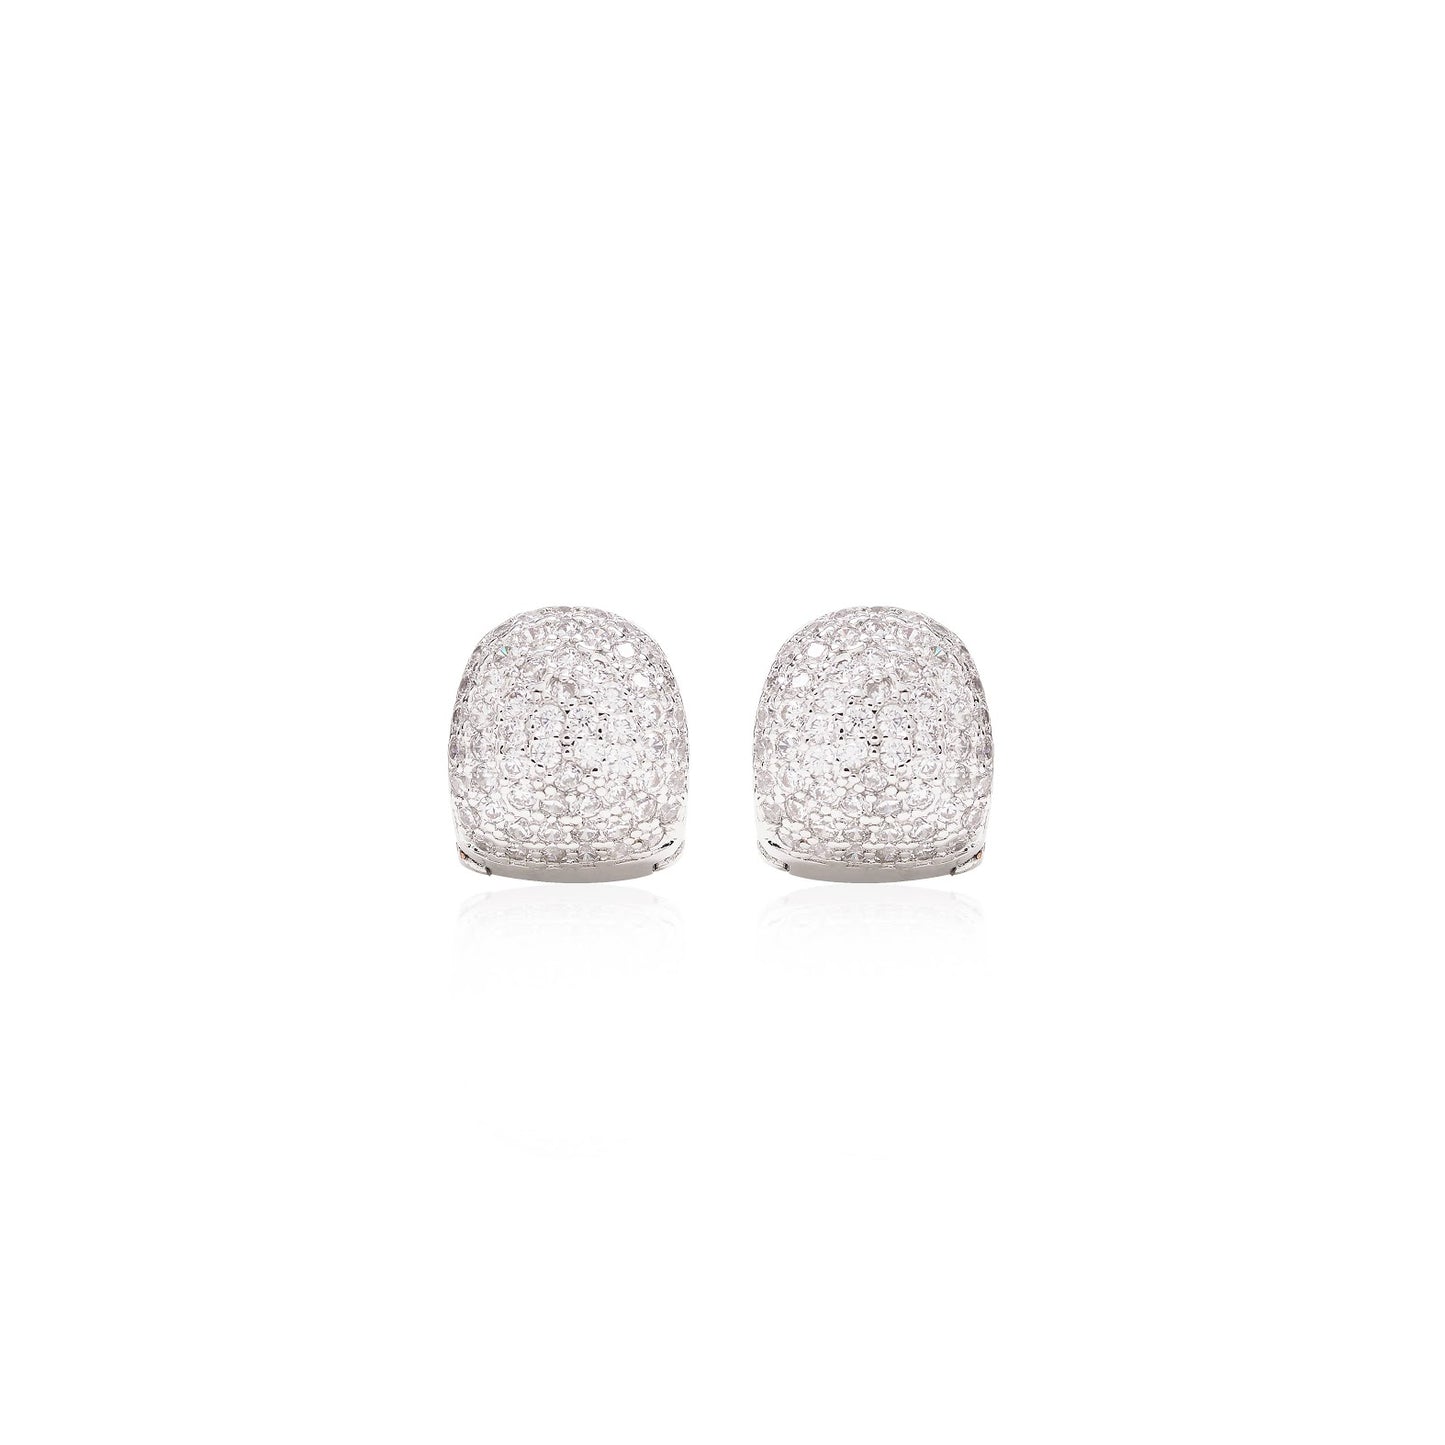 8 Lines of White Zirconia Earrings